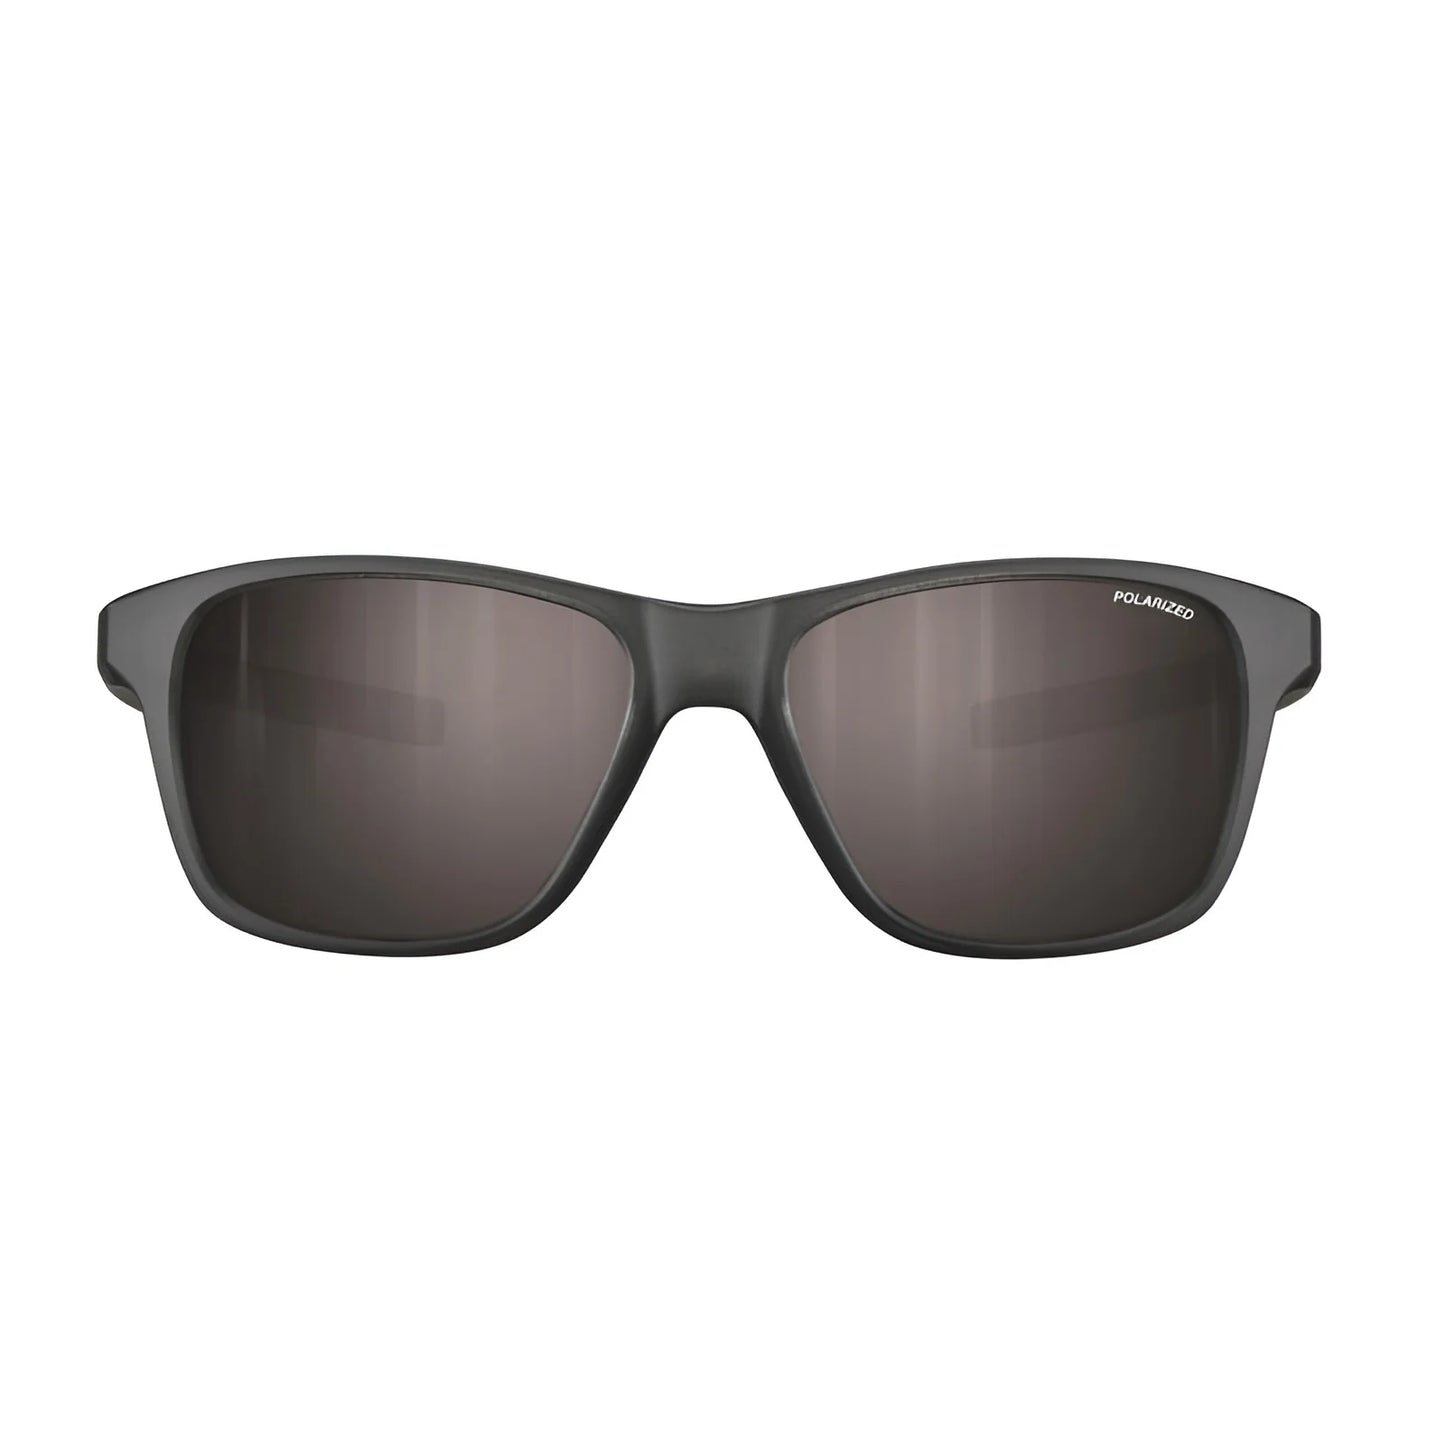 Julbo Cruiser Sunglasses | Size 51